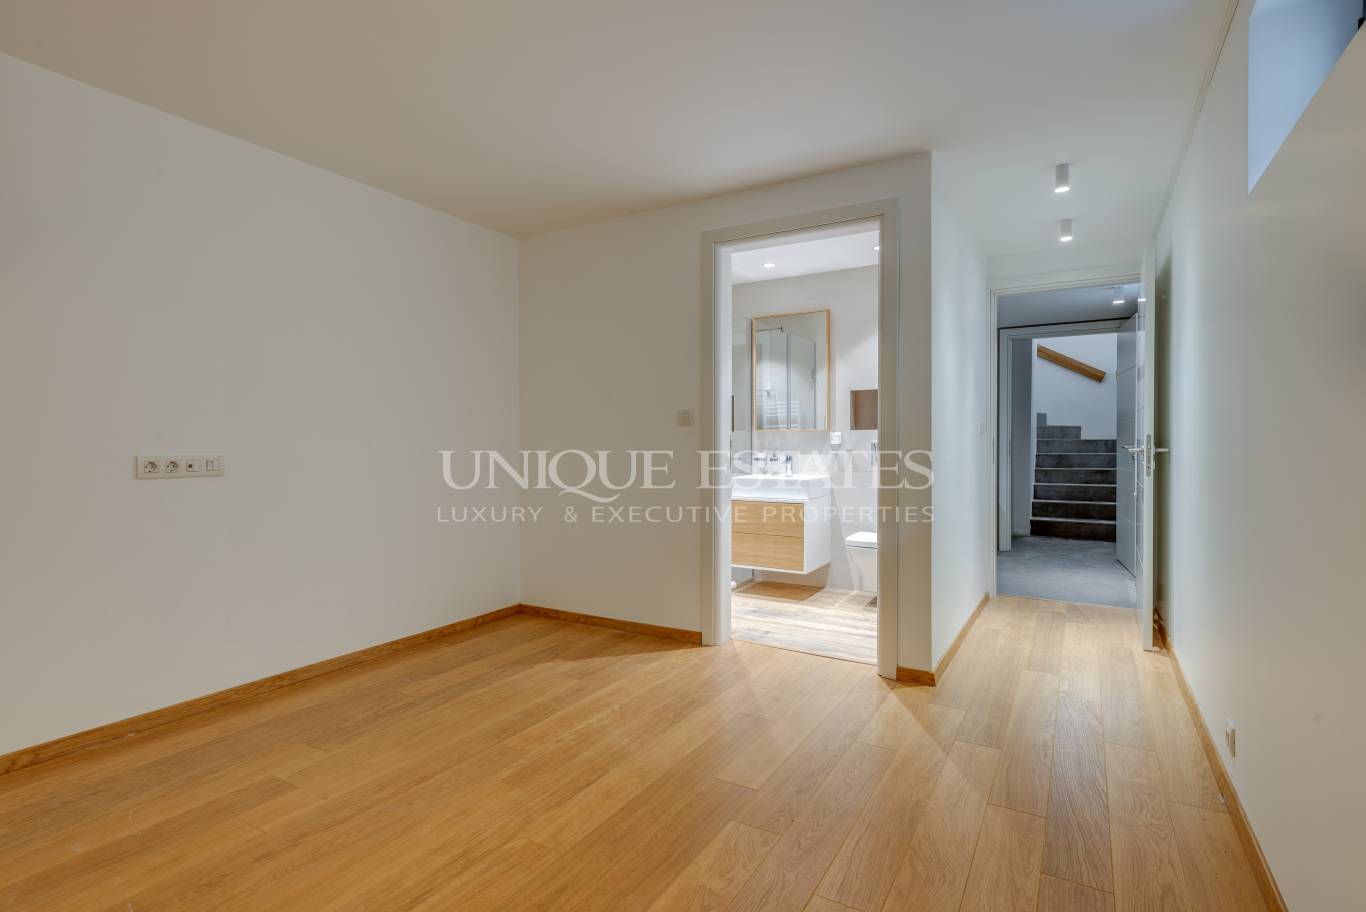 House for rent in Sofia, Malinova dolina va with listing ID: K14506 - image 17